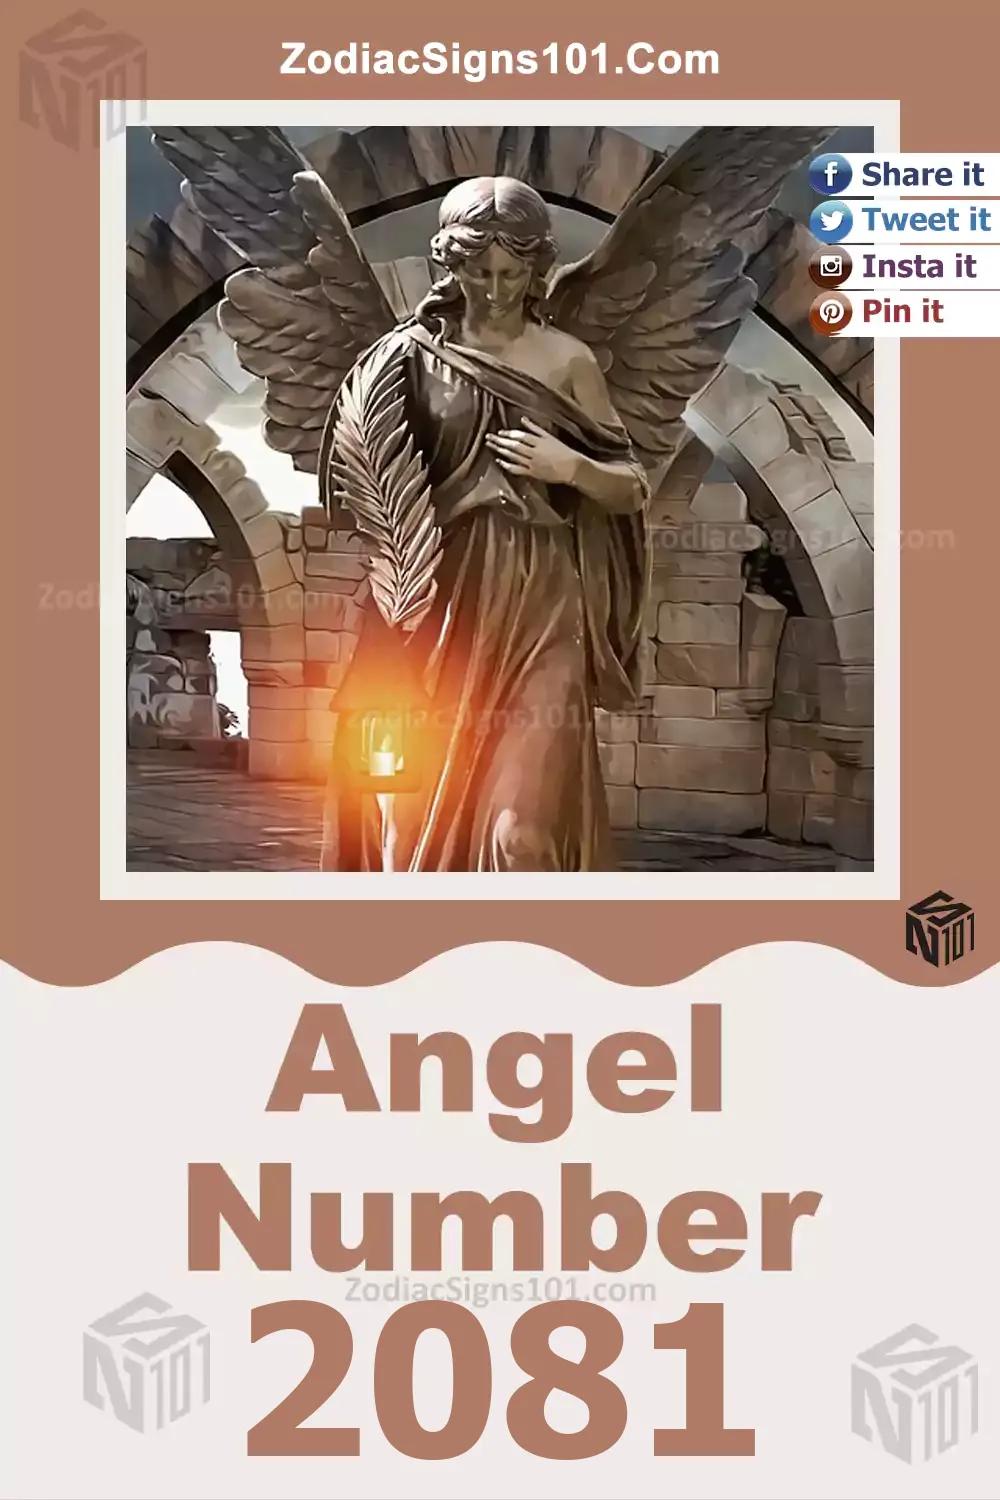 2081-Angel-Number-Meaning.jpg